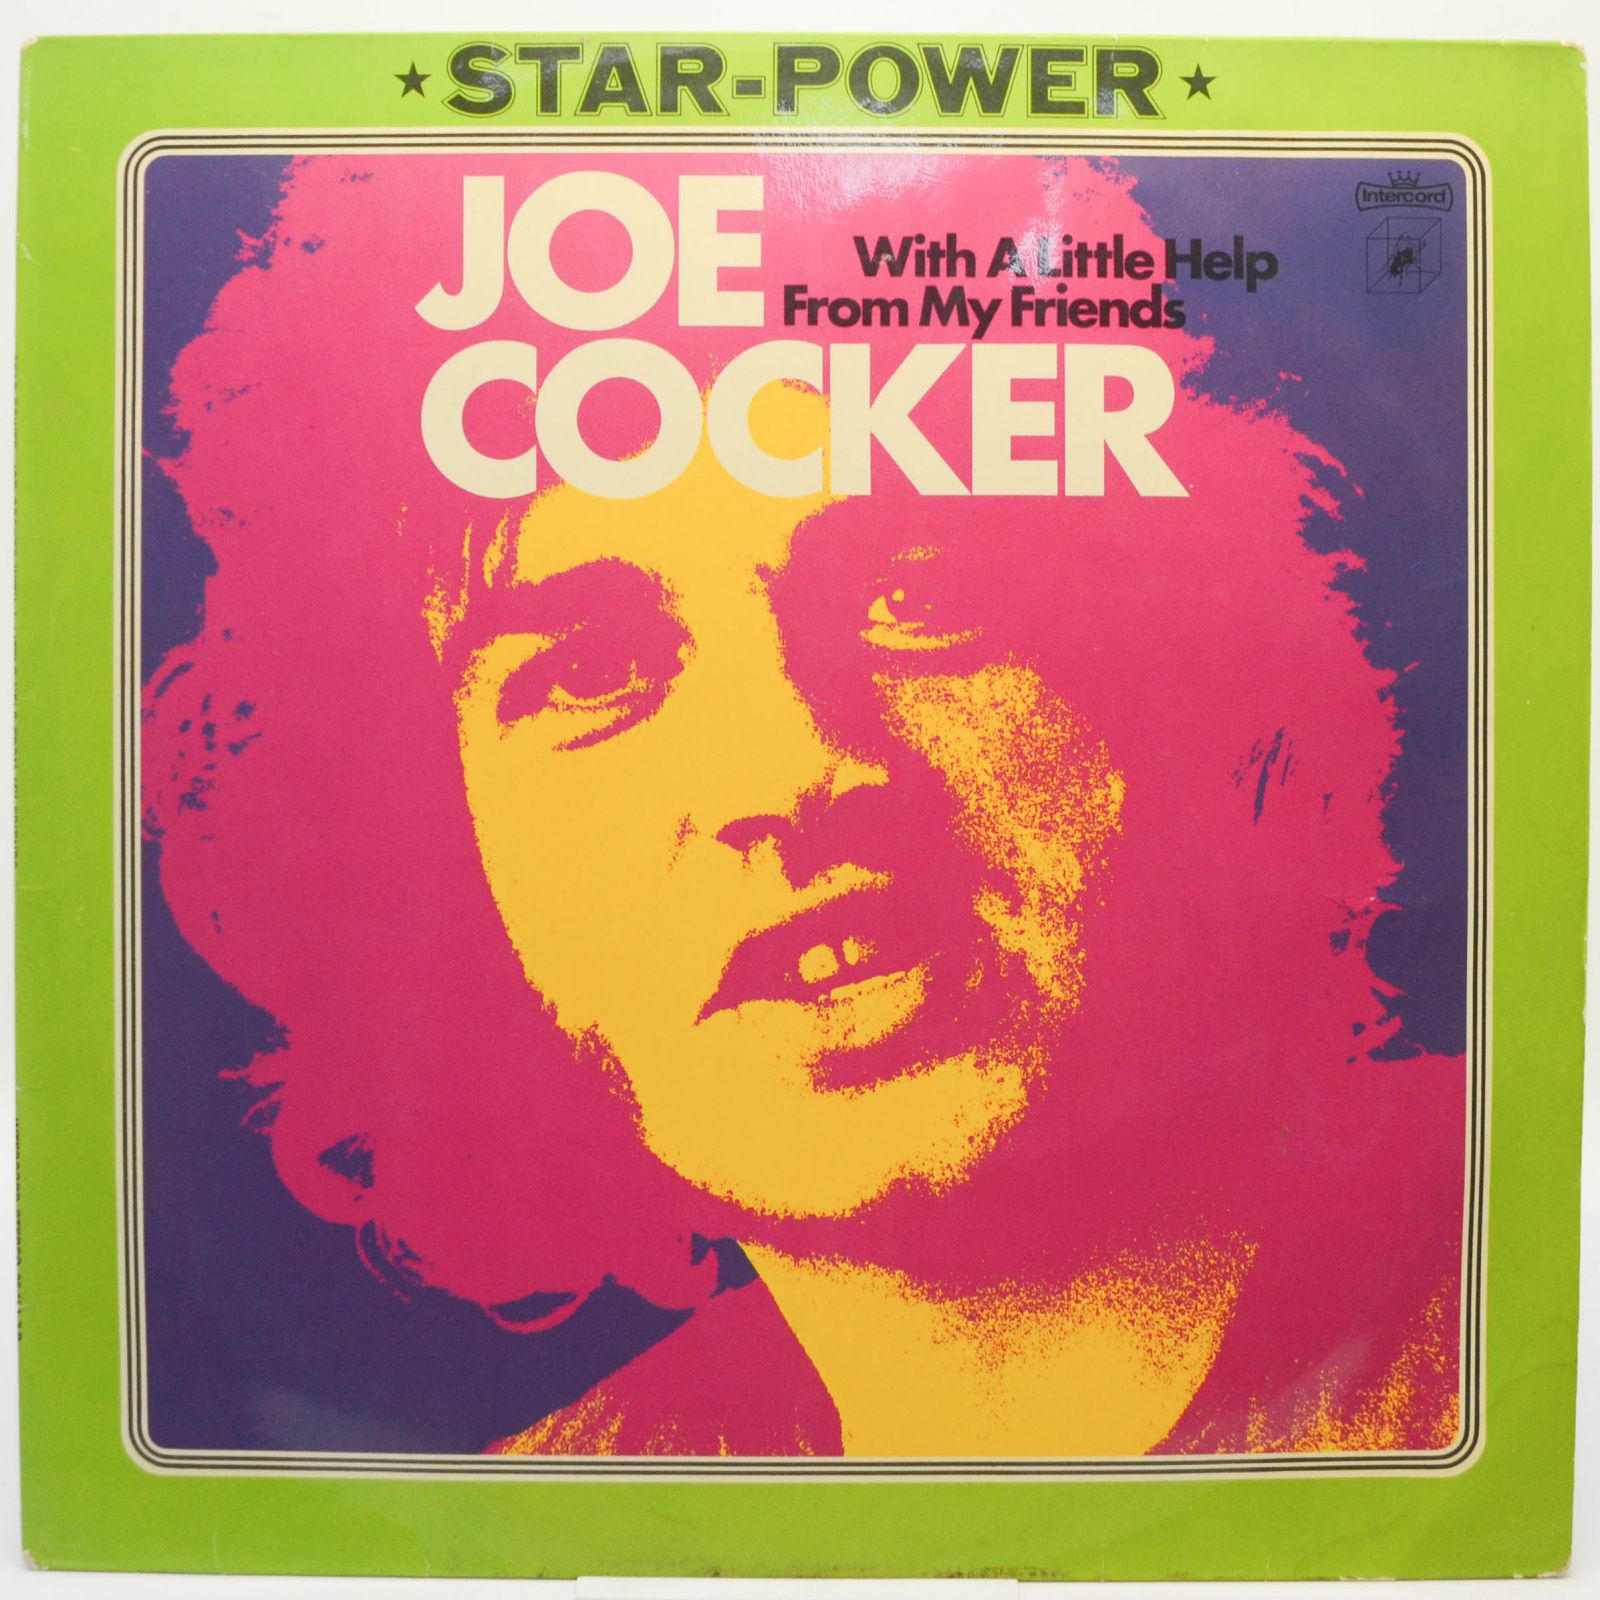 Joe Cocker — With A Little Help From My Friends, 1976